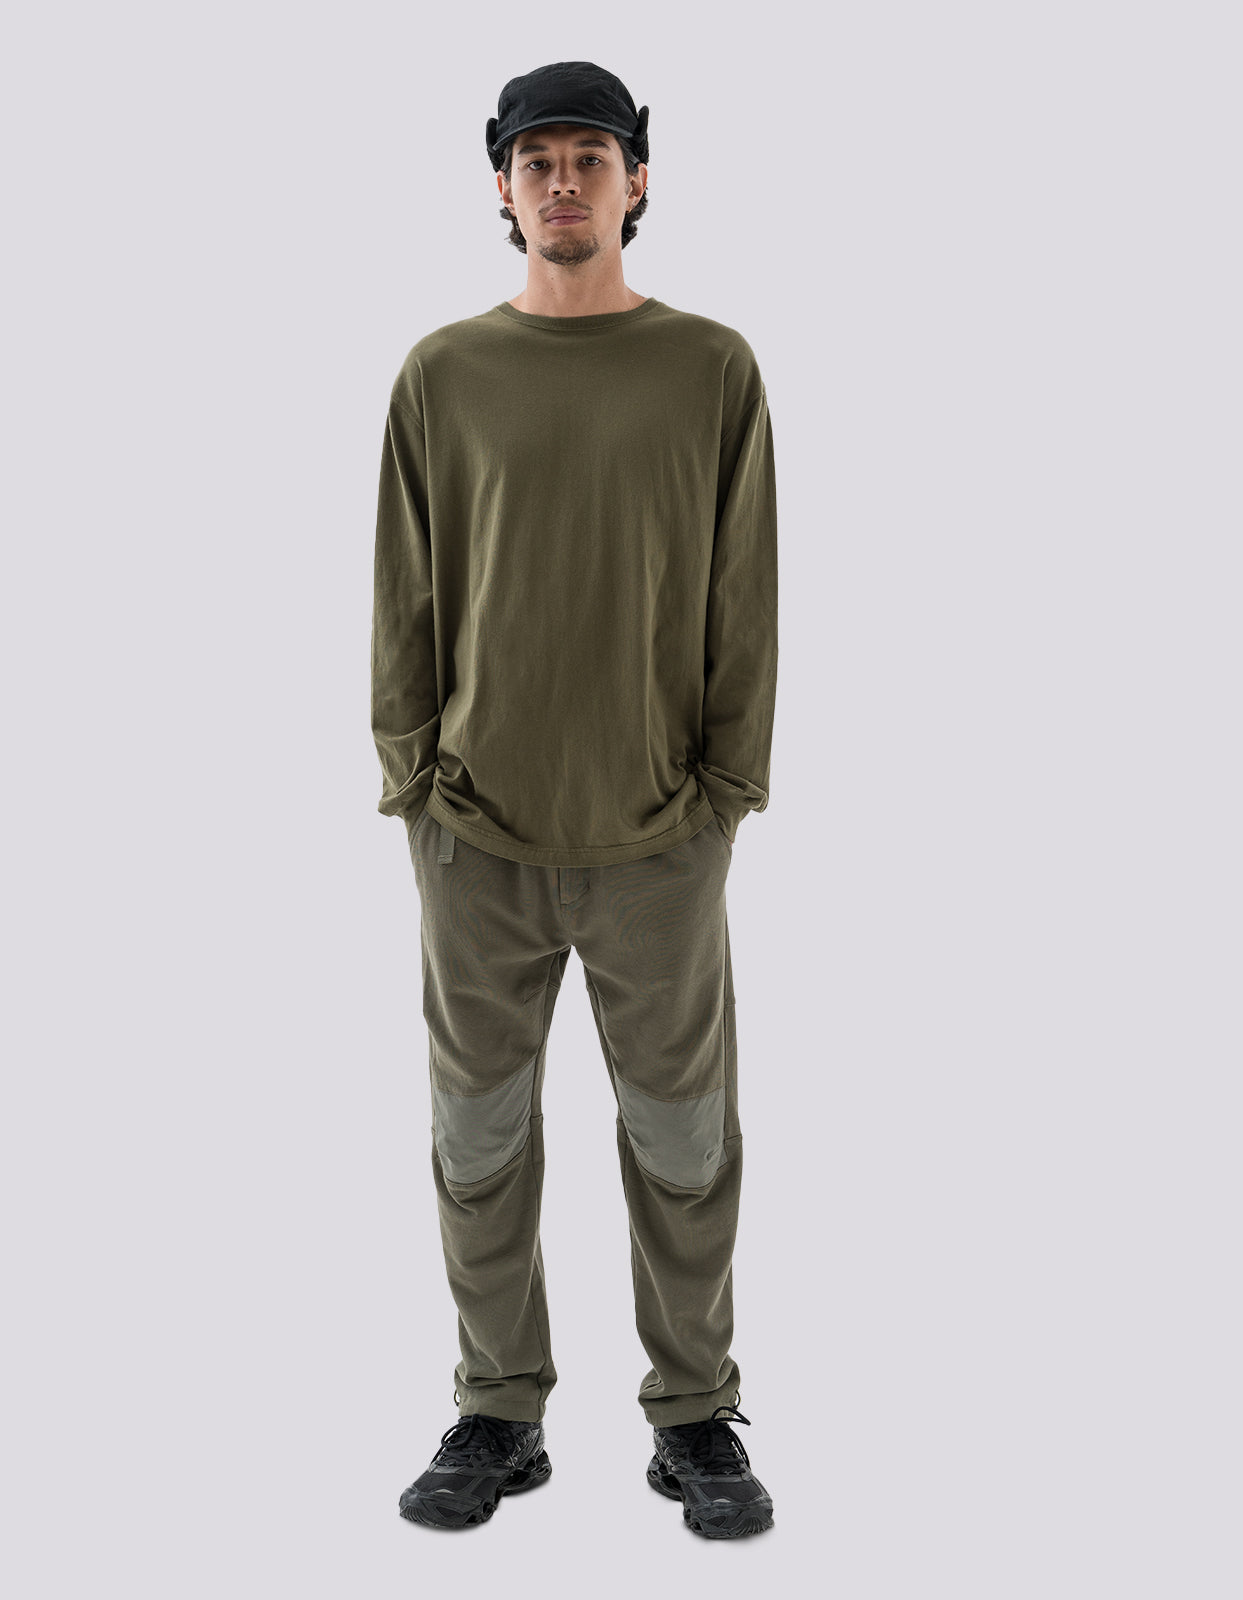 4554 Articulated Shinobi Sweatpants Olive OG-107F/Sage